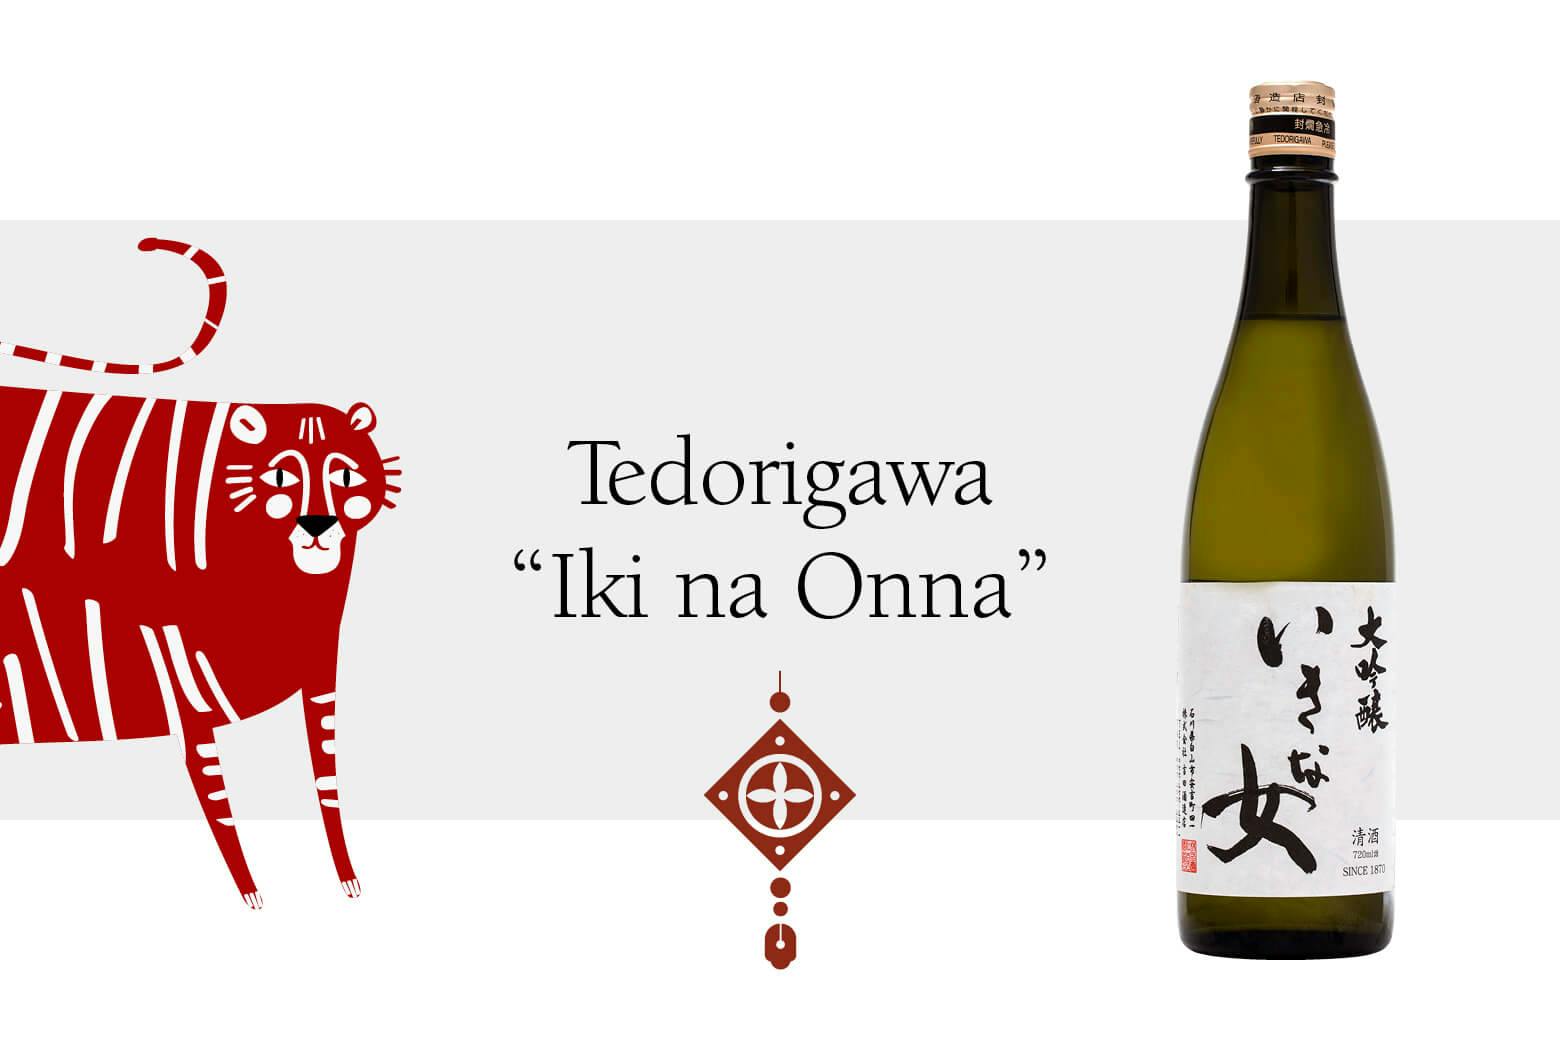 Tedorigawa “Iki na Onna” with Chinese zodiac Tiger